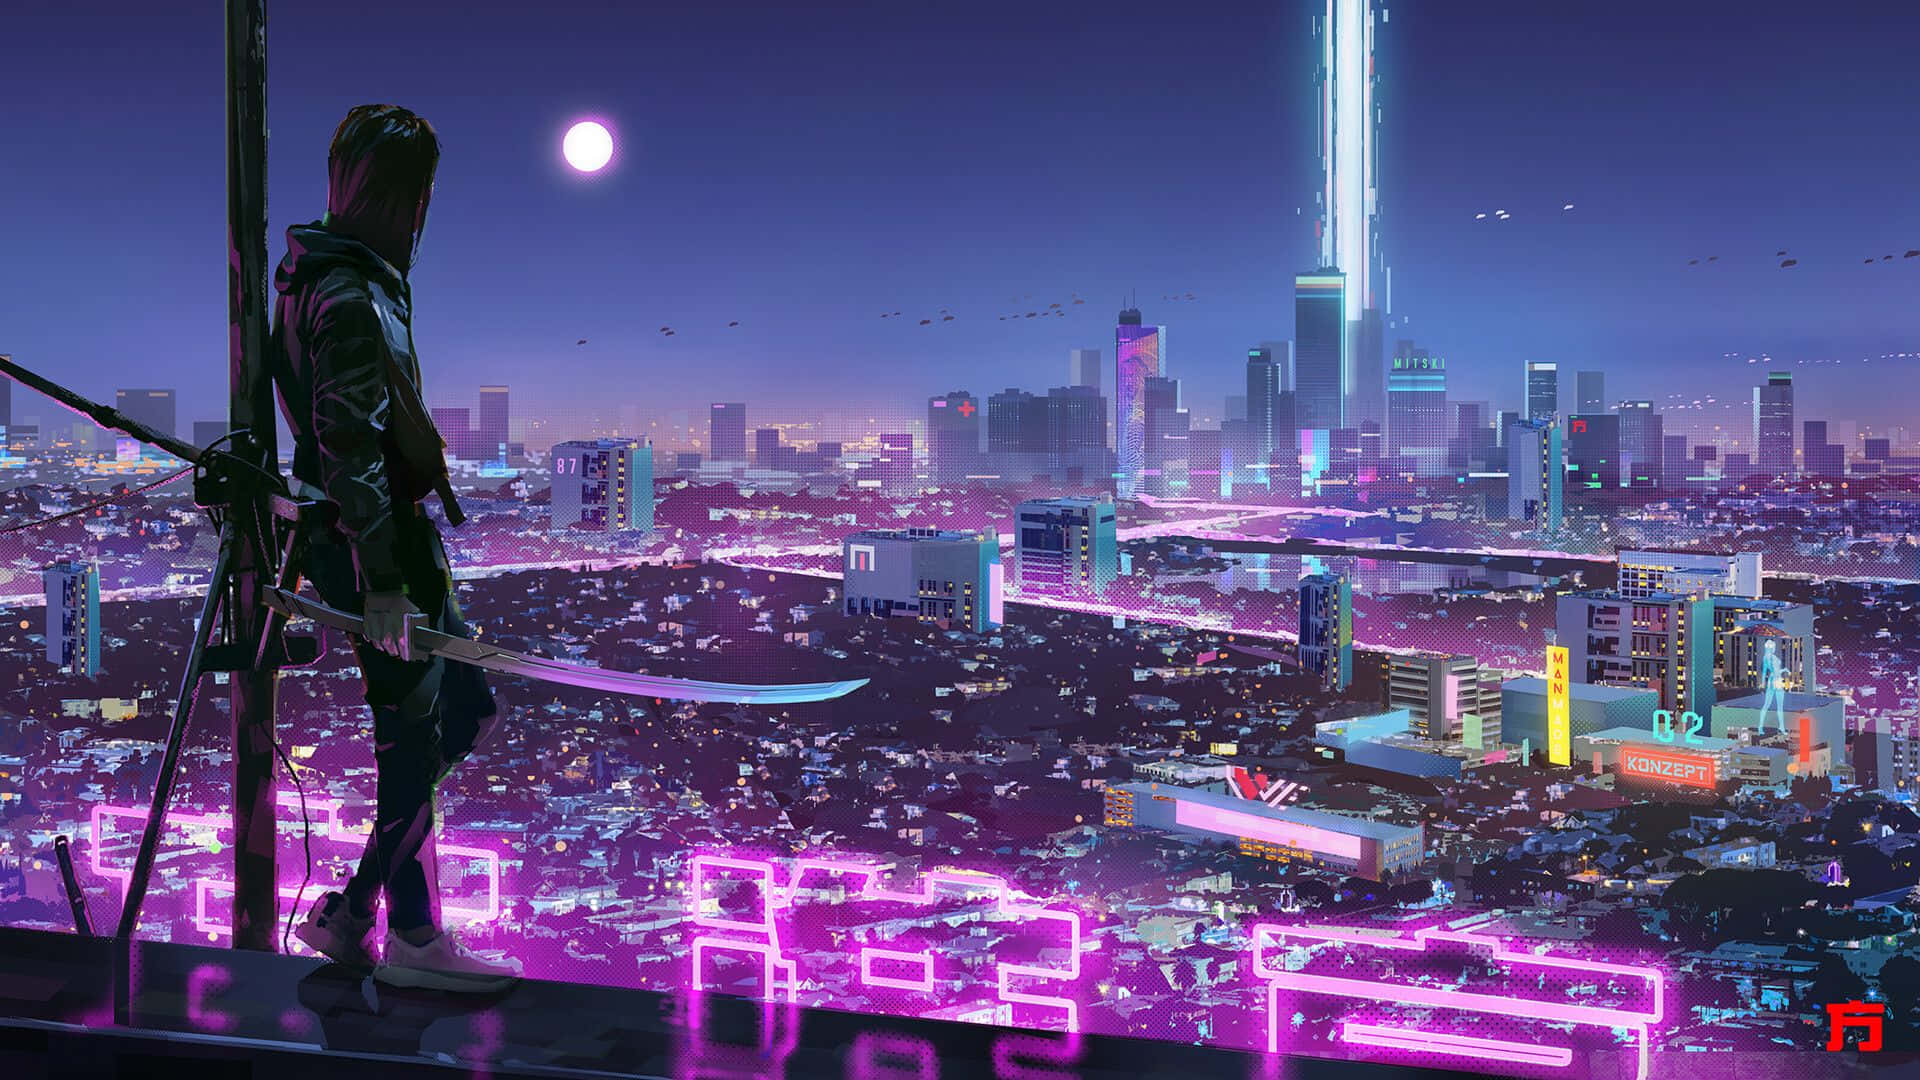 cyberpunk cityscape wallpaper